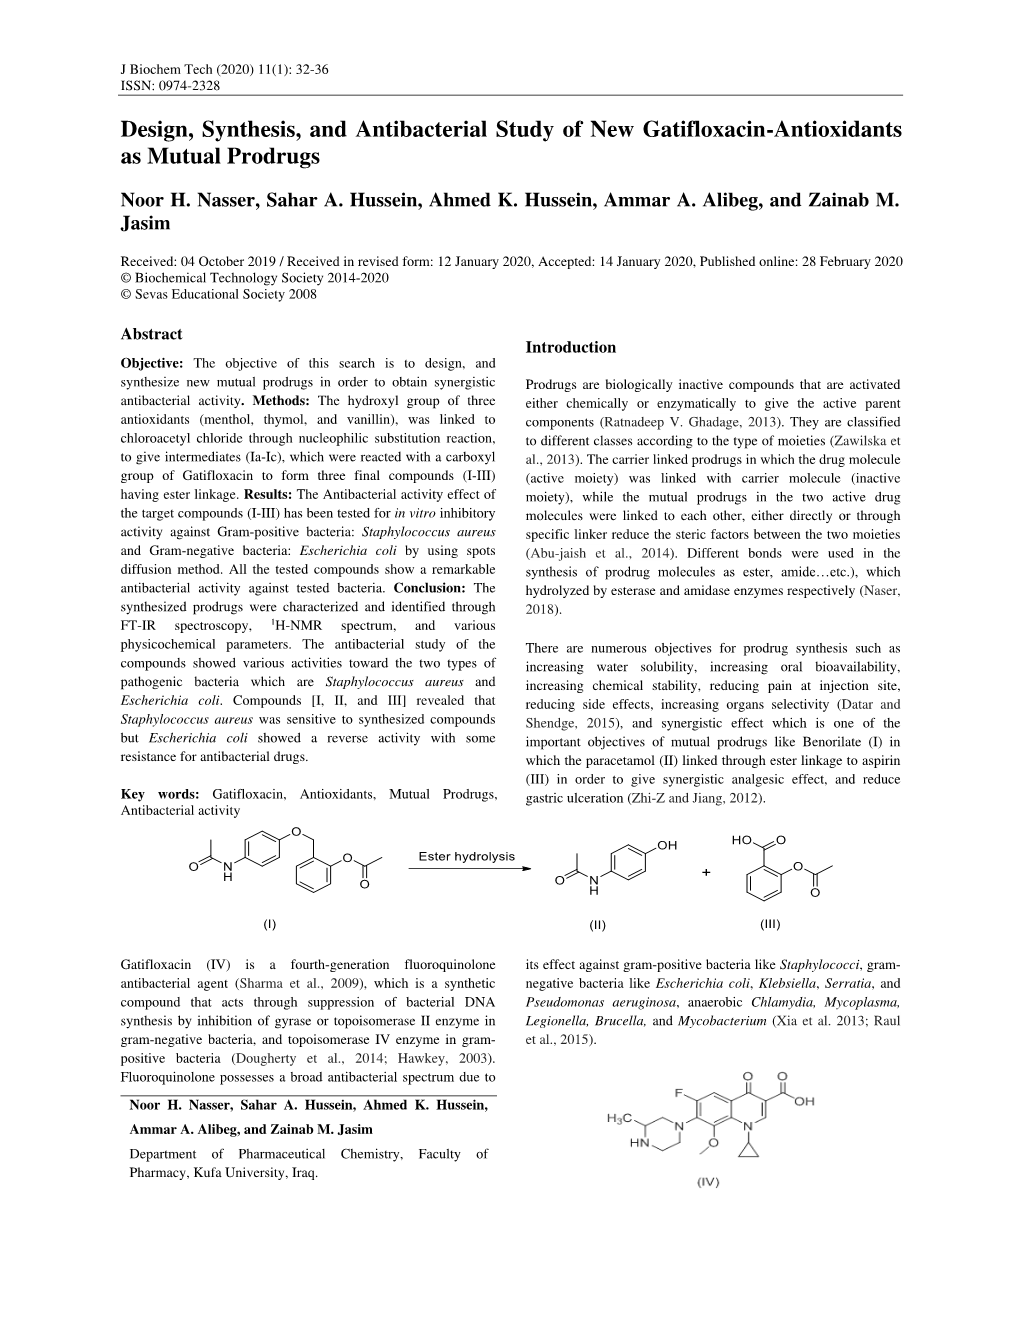 Design, Synthesis, and Antibacterial Study of New Gatifloxacin-Antioxidants As Mutual Prodrugs